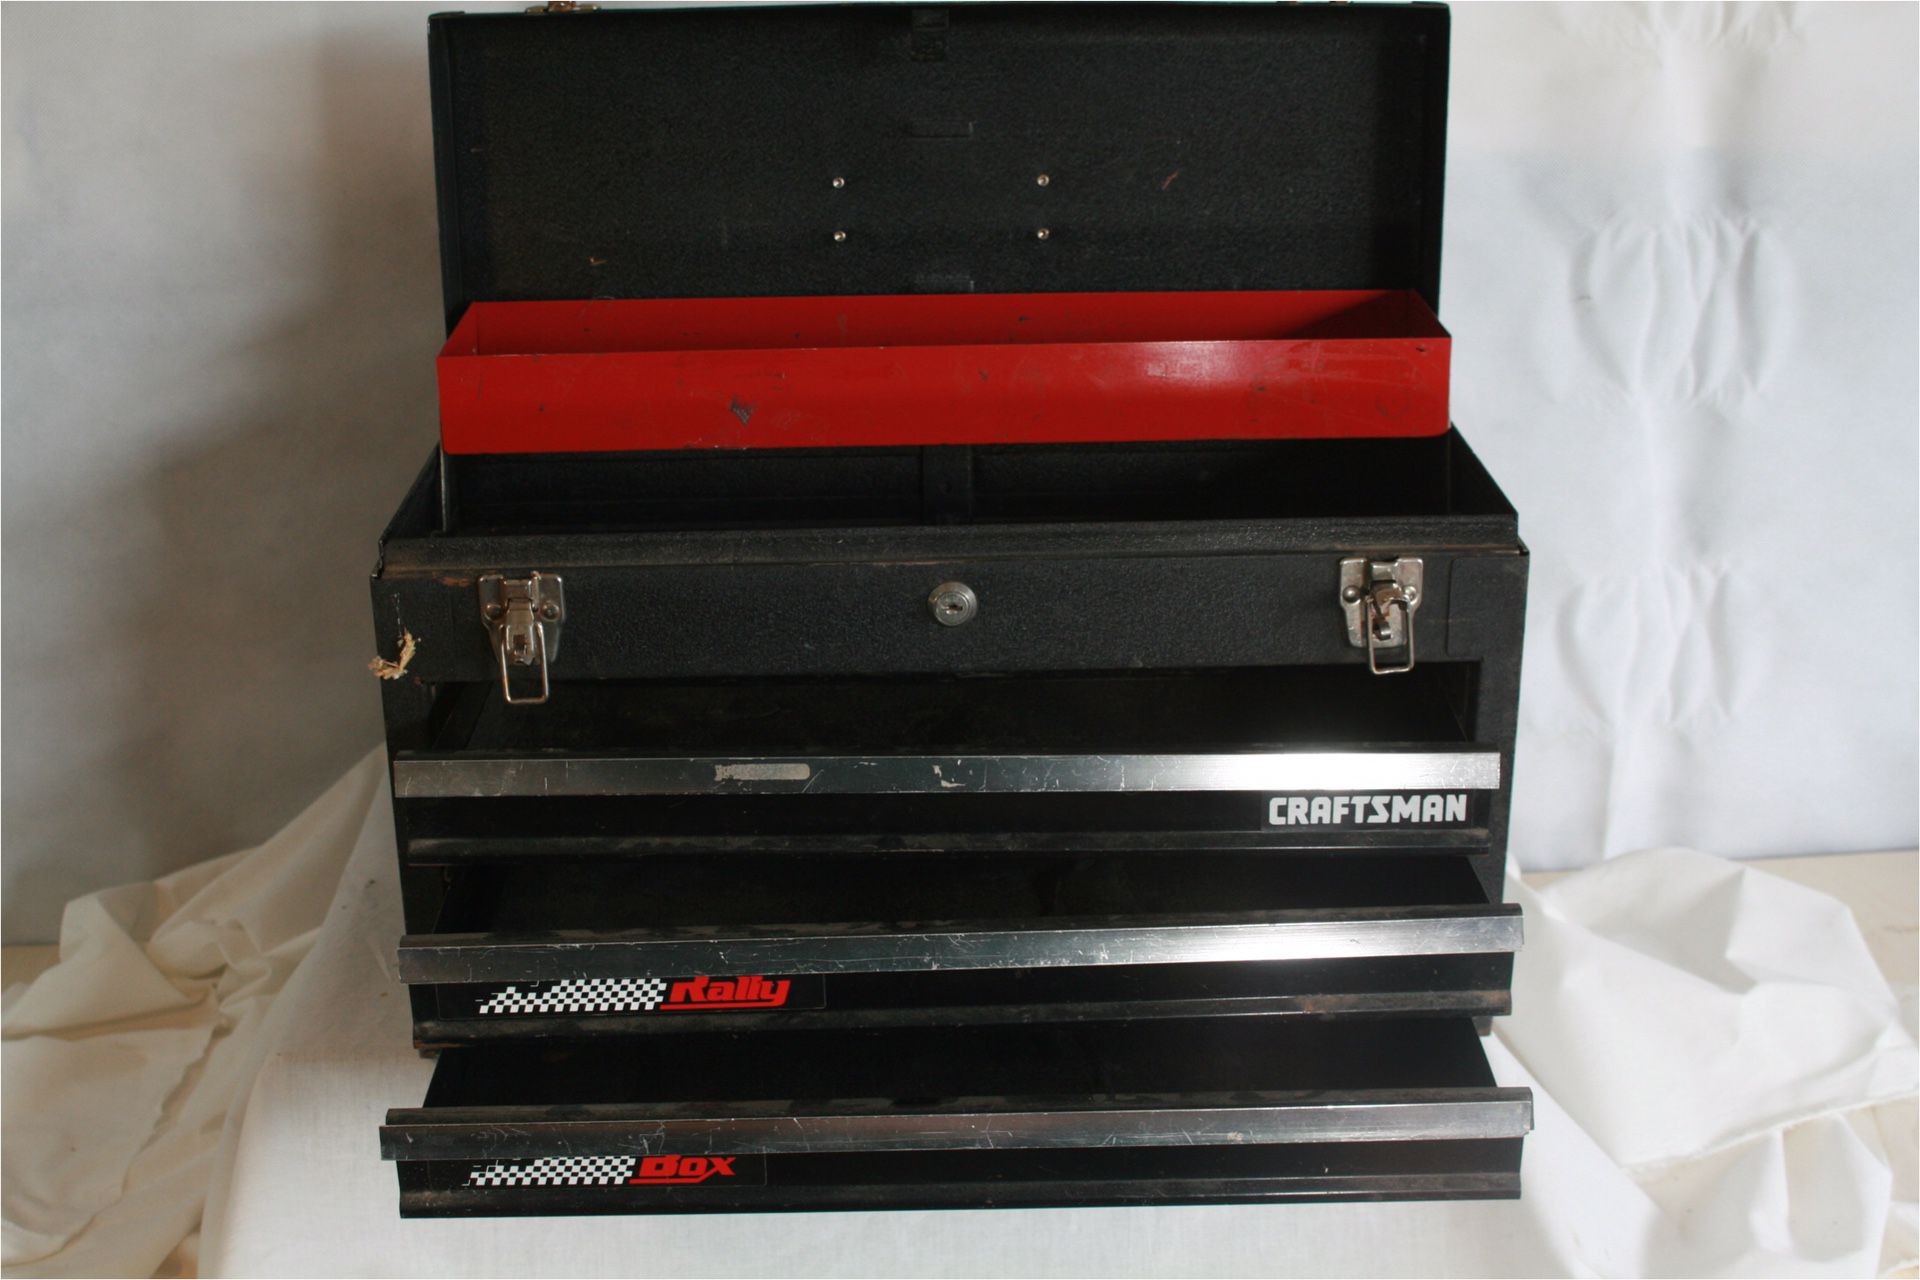 Craftsman “Rally” 3-drawer toolbox